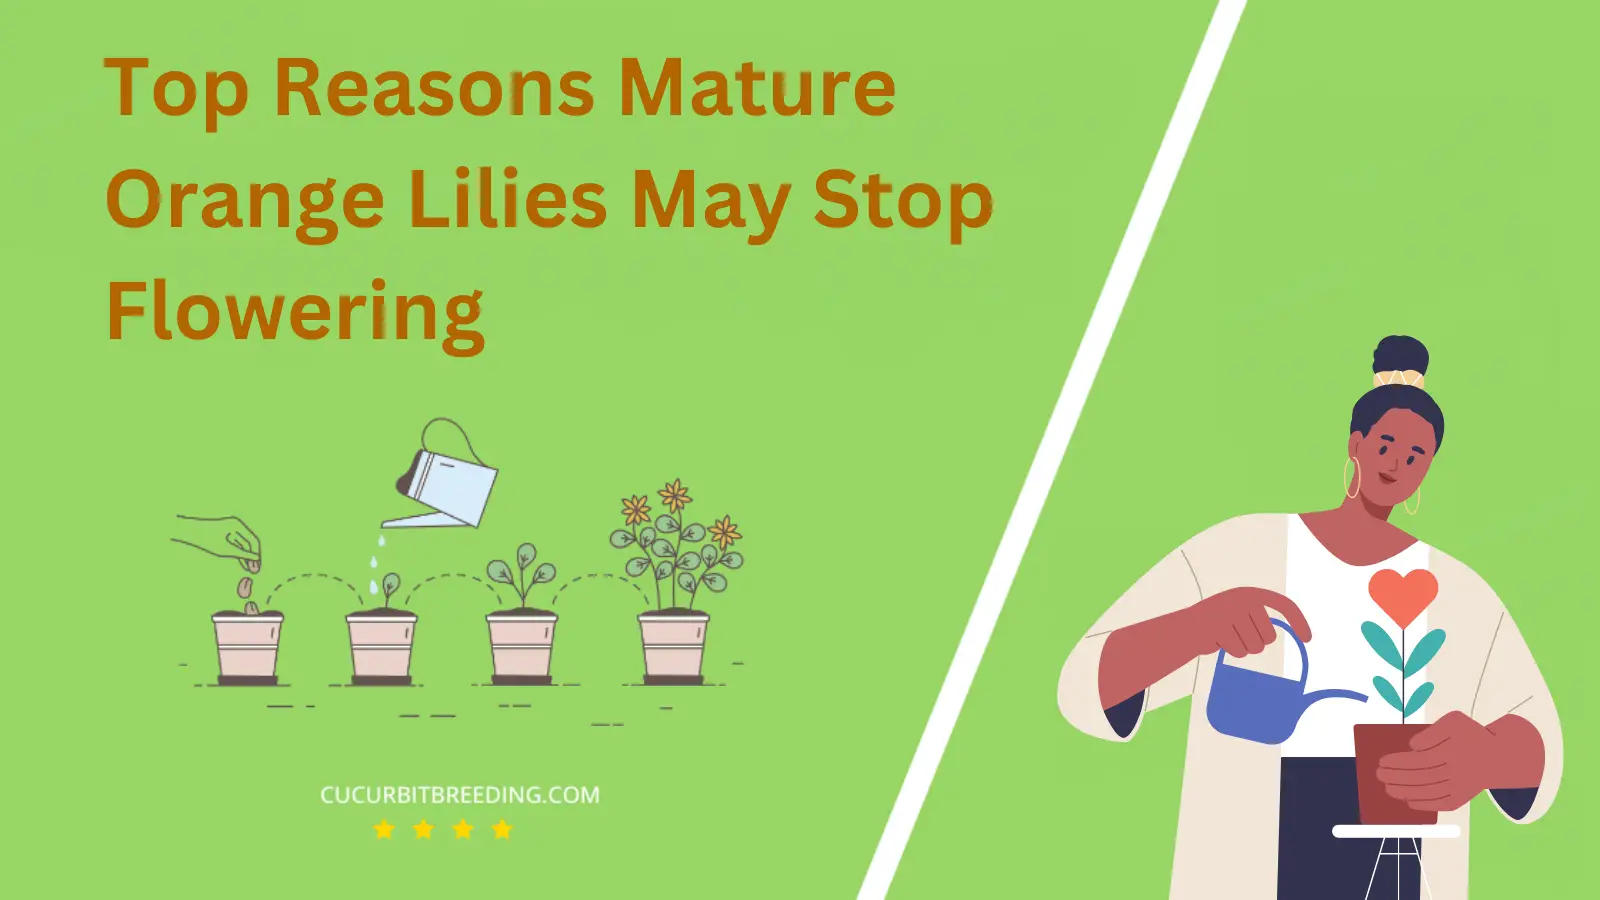 Top Reasons Mature Orange Lilies May Stop Flowering